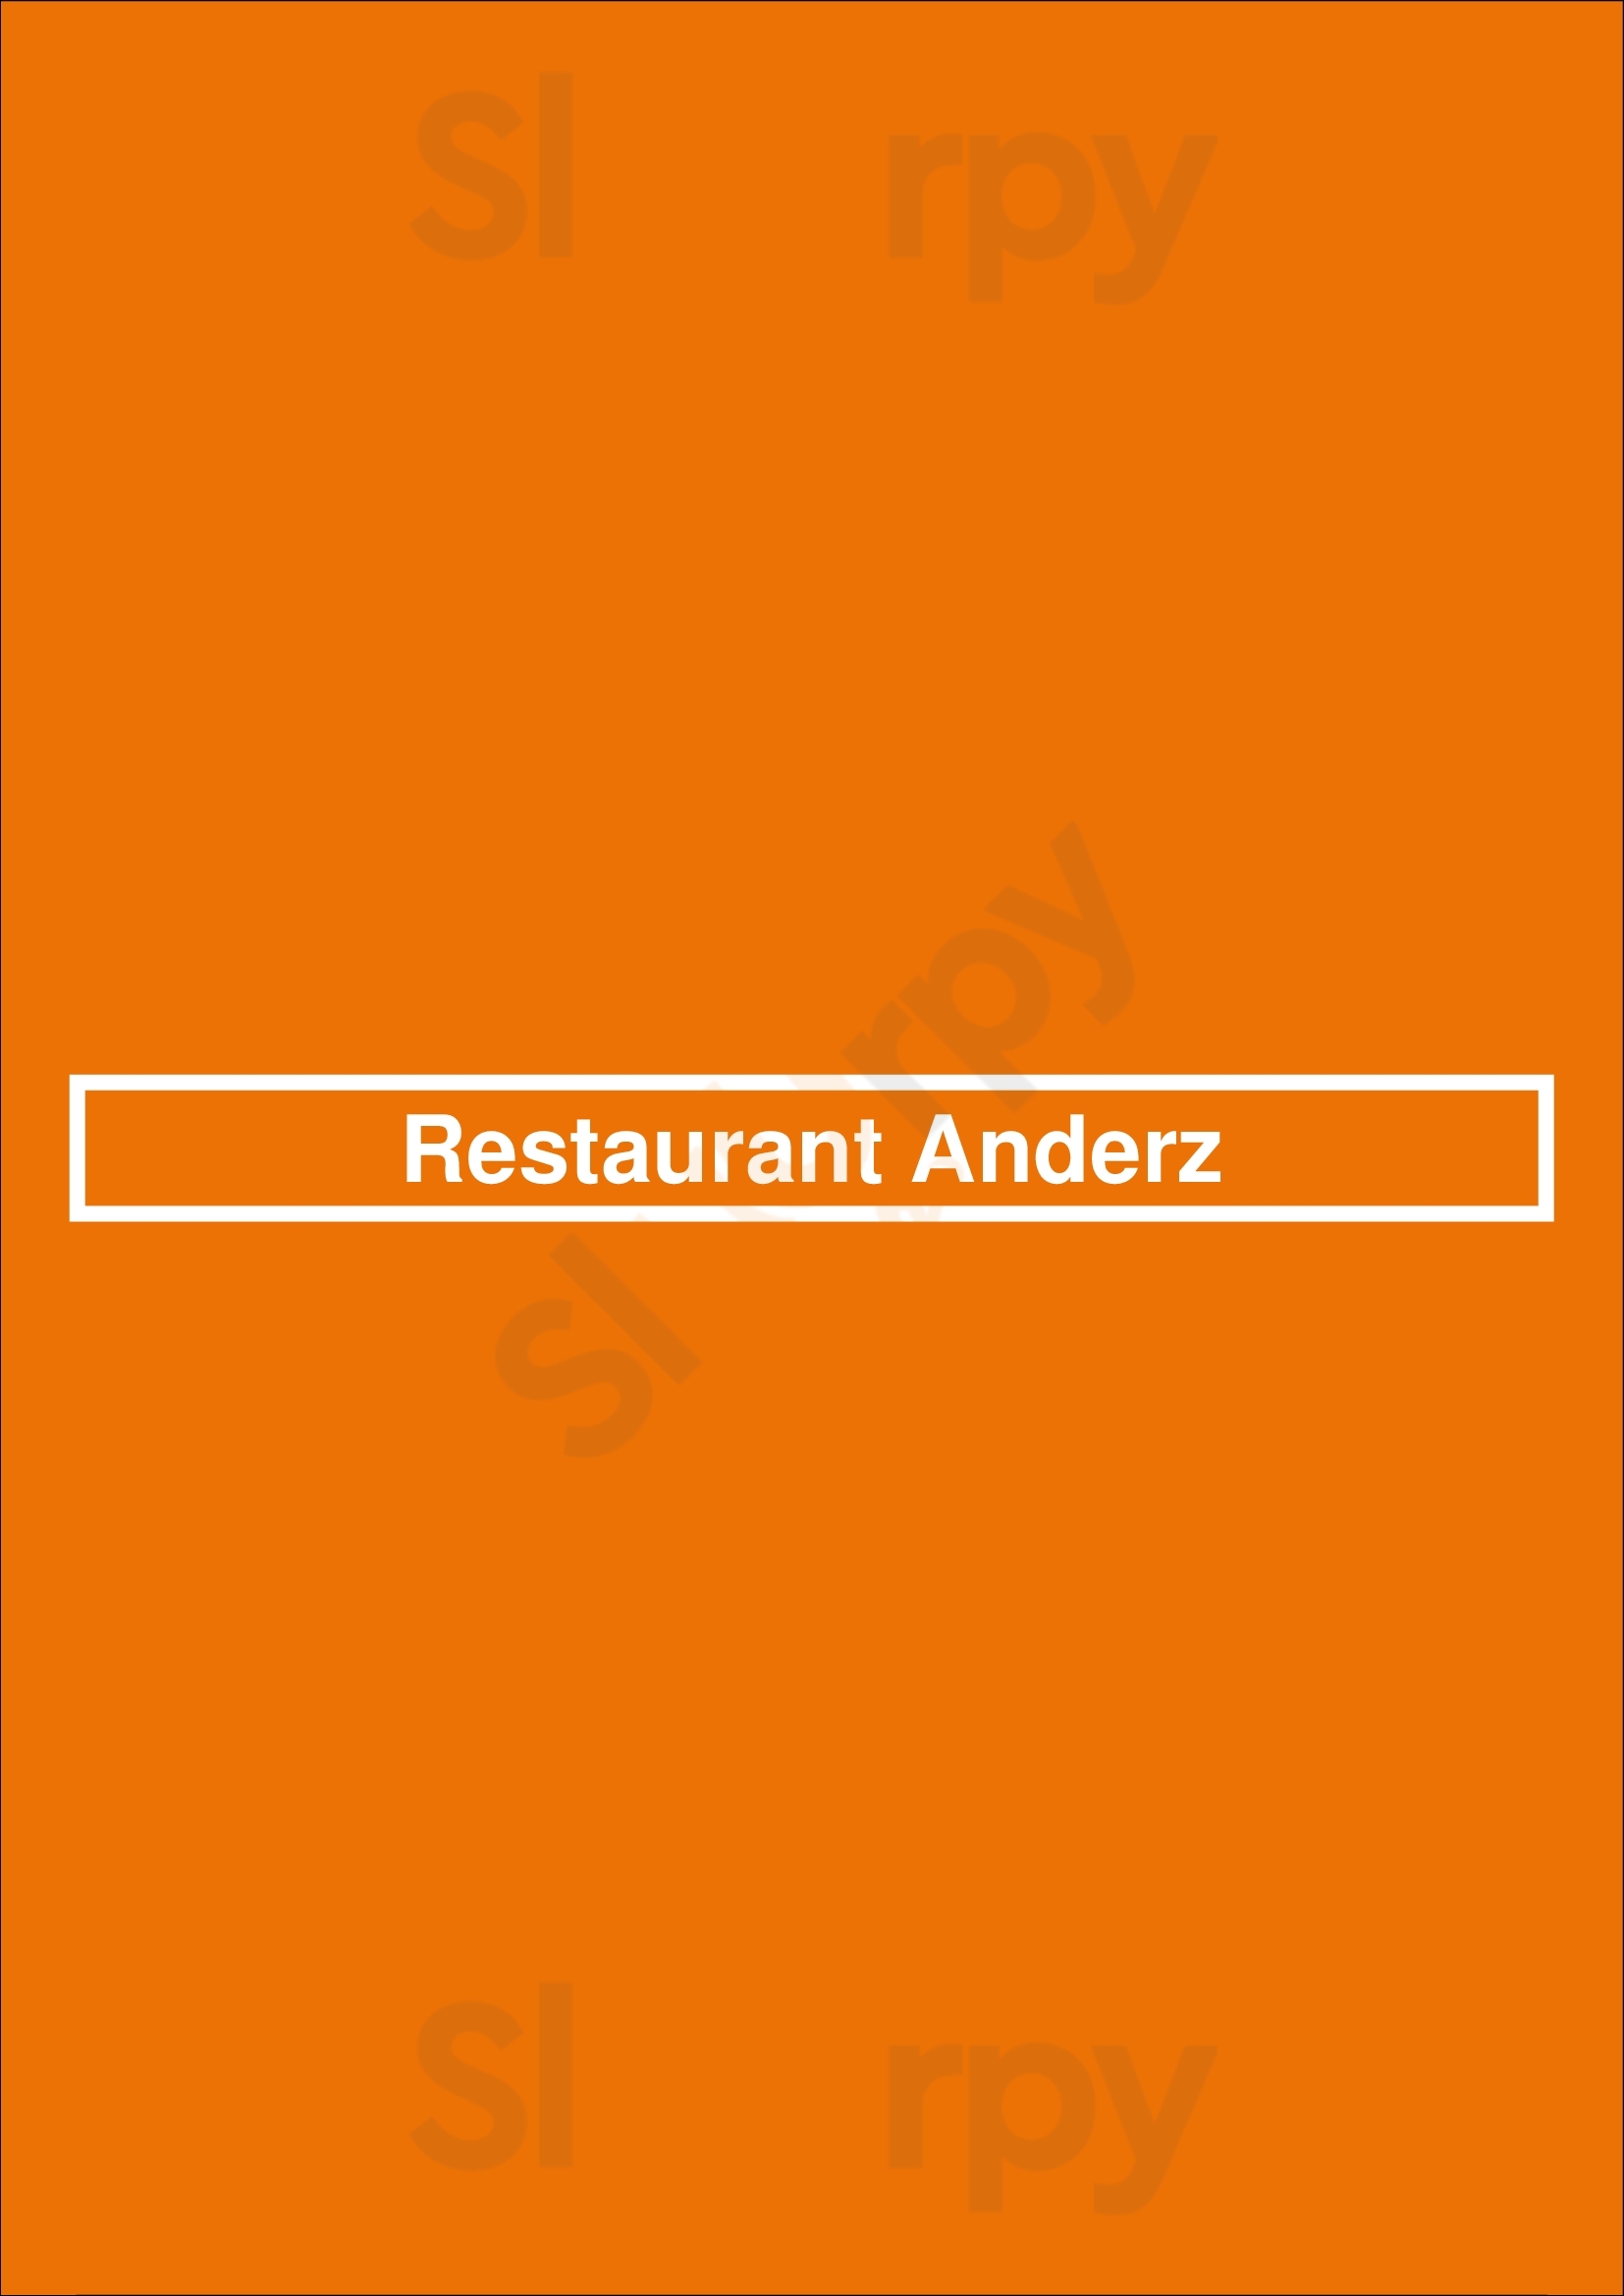 Restaurant Anderz Loosdrecht Menu - 1